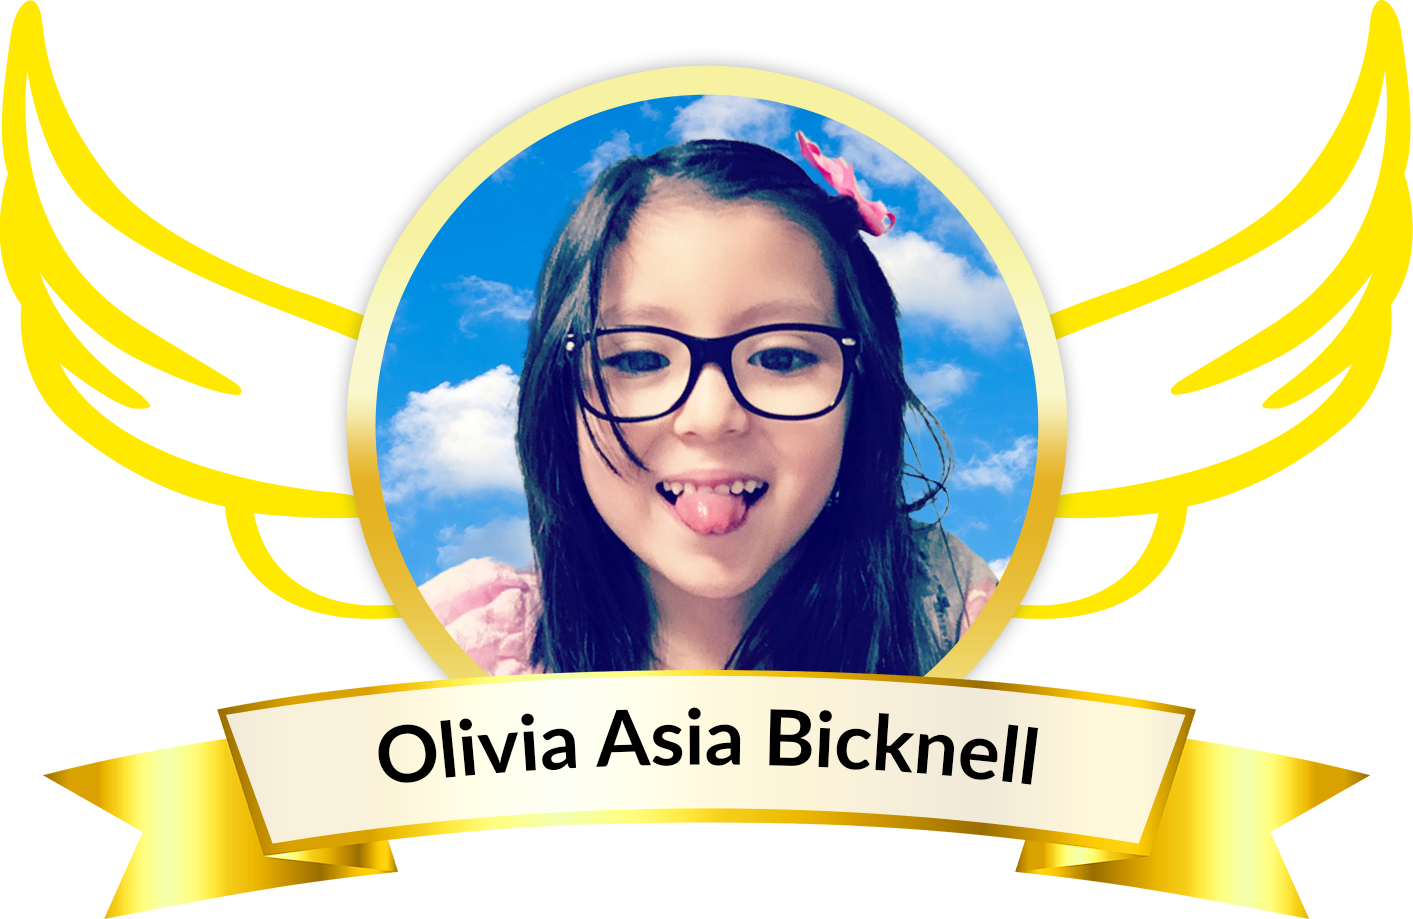 Olivia Asia Bicknell